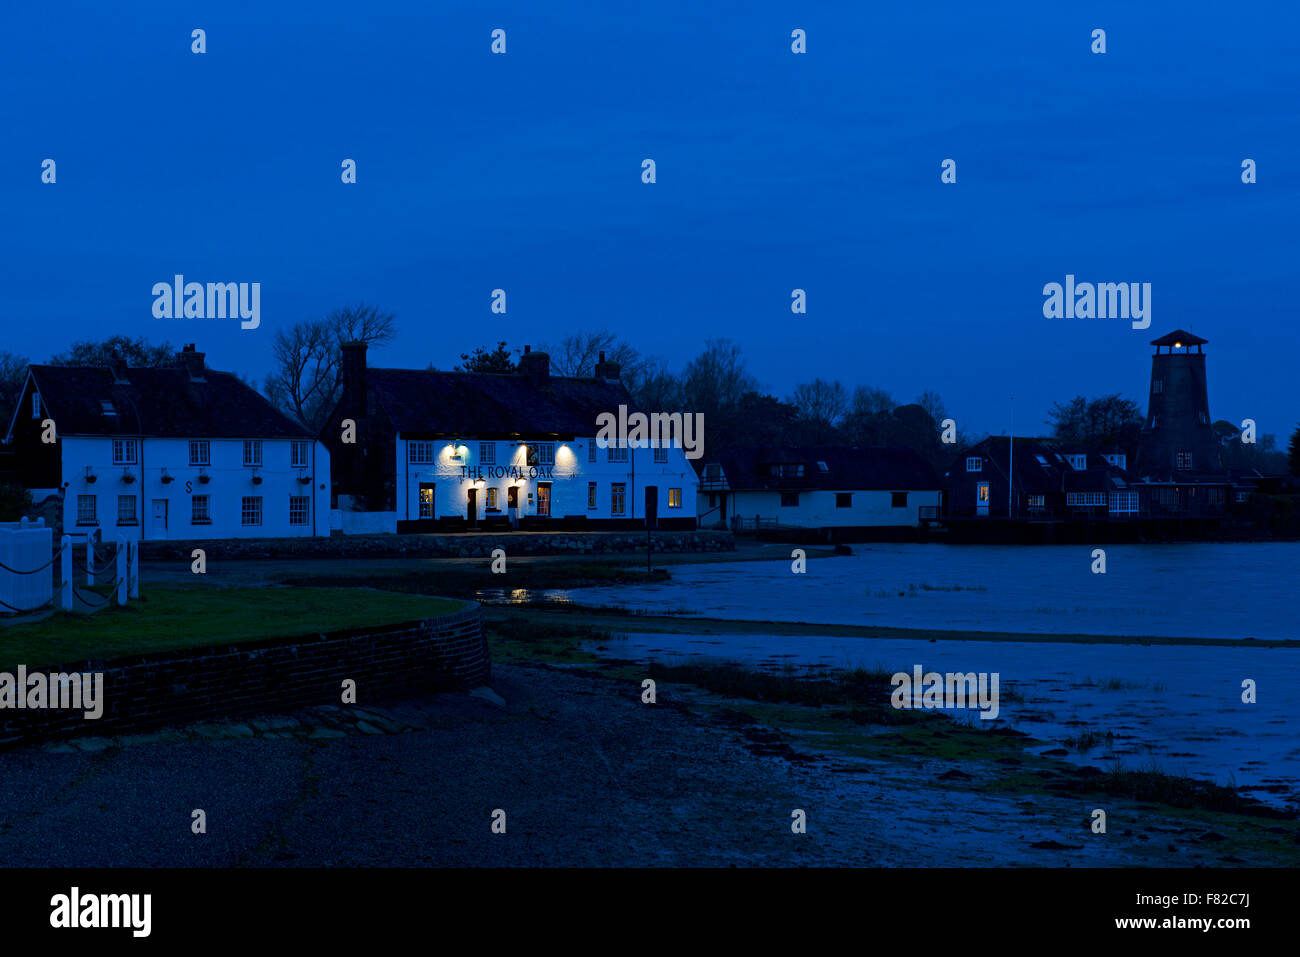 The Royal Oak pub and Langstone Mill, at night, Langstone, Havant, Hampshire, England UK Stock Photo